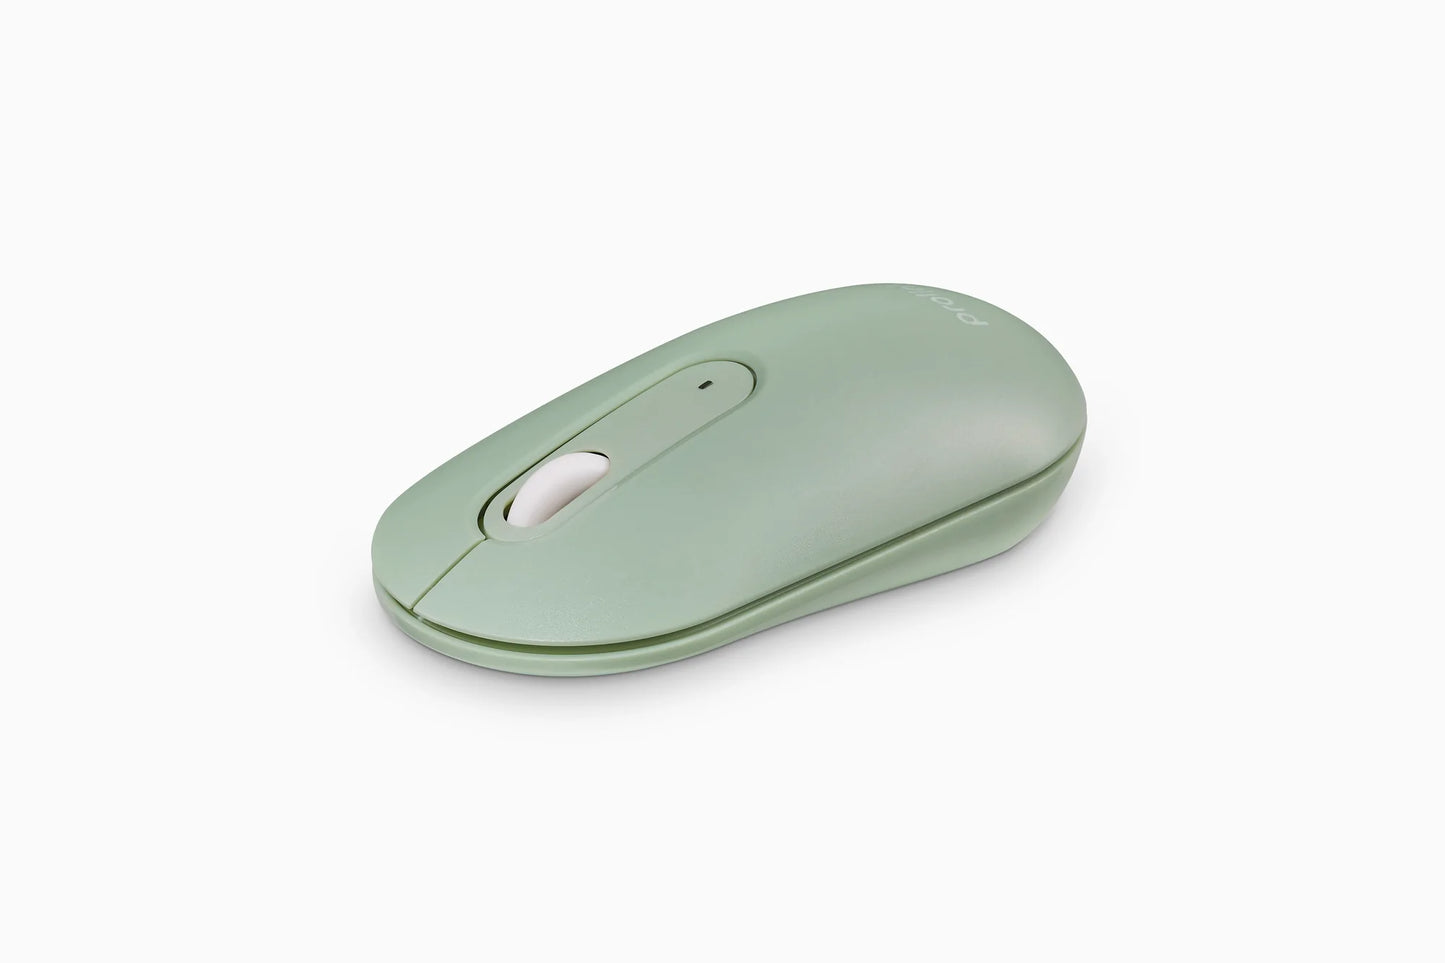 Maca Wireless Mouse